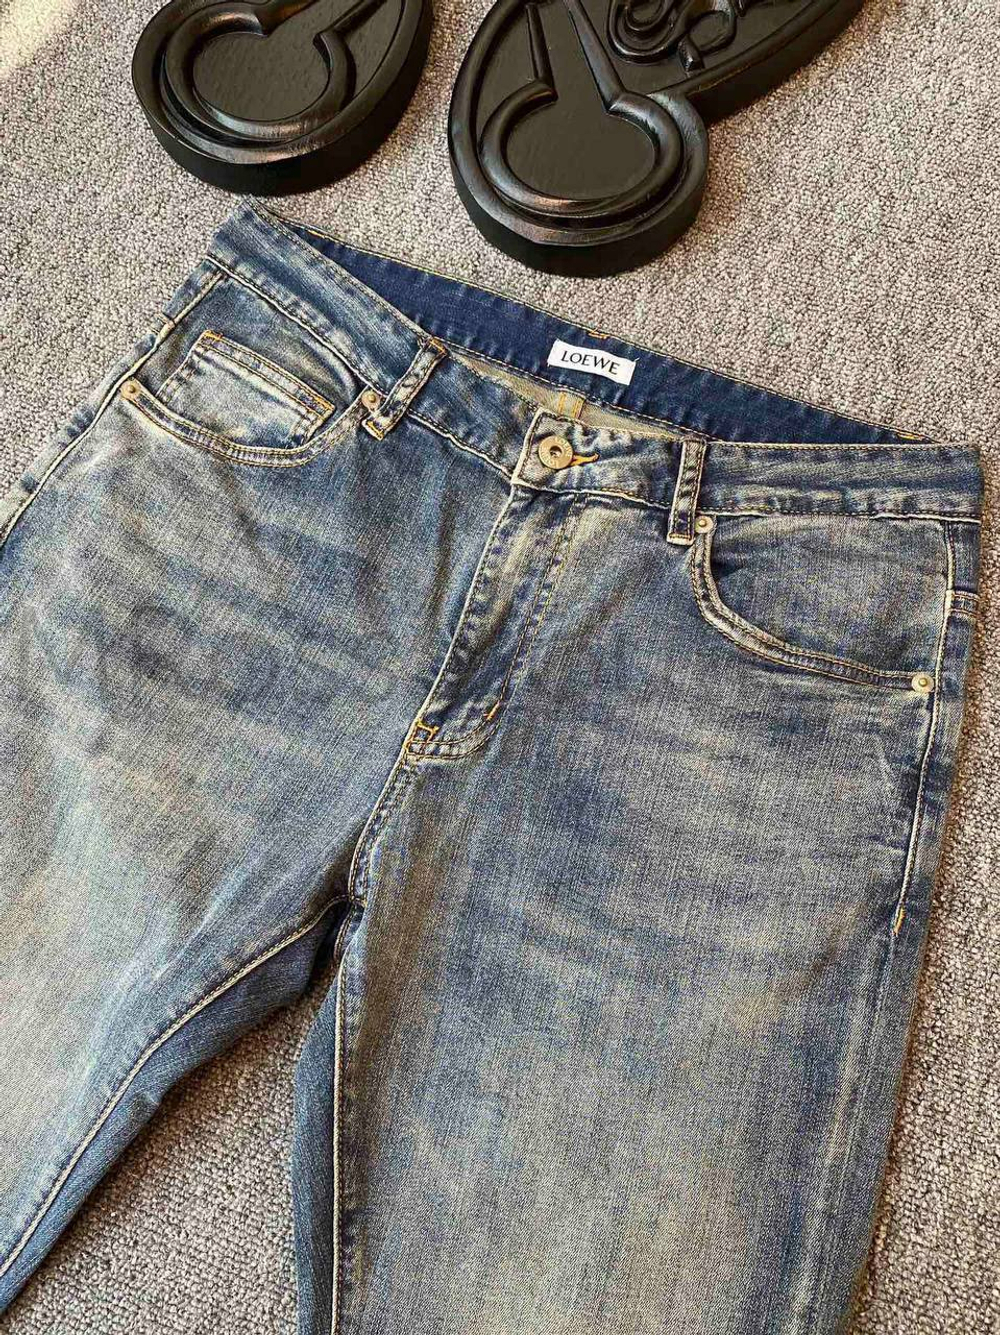 Мужские джинсы Loewe с вышивкой на заднем кармане